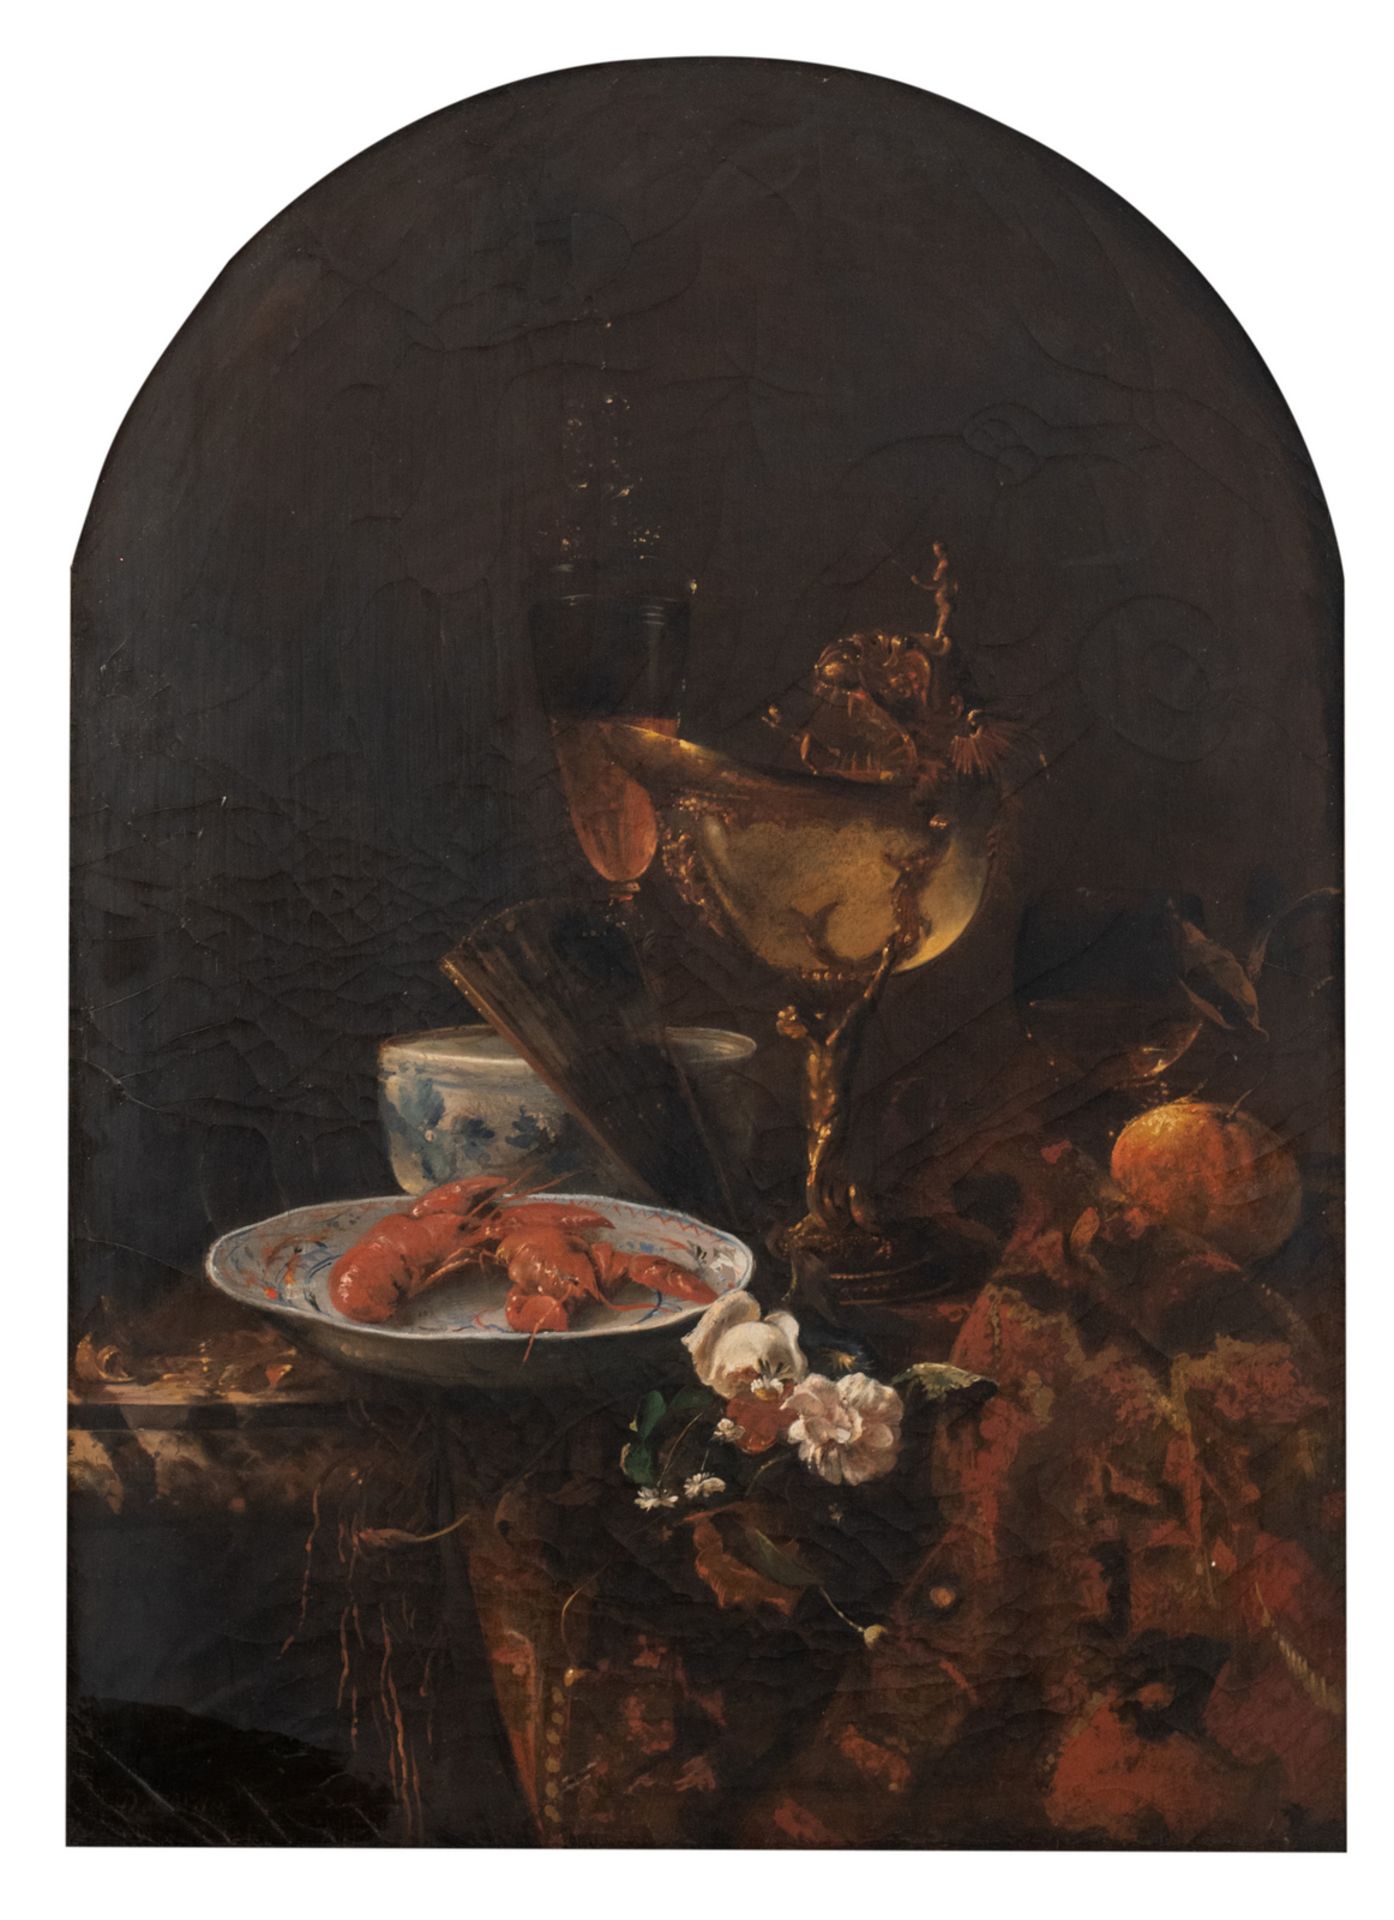 De Noter D., a still life in the 17thC manner, oil on canvas, 58 x 82 cm